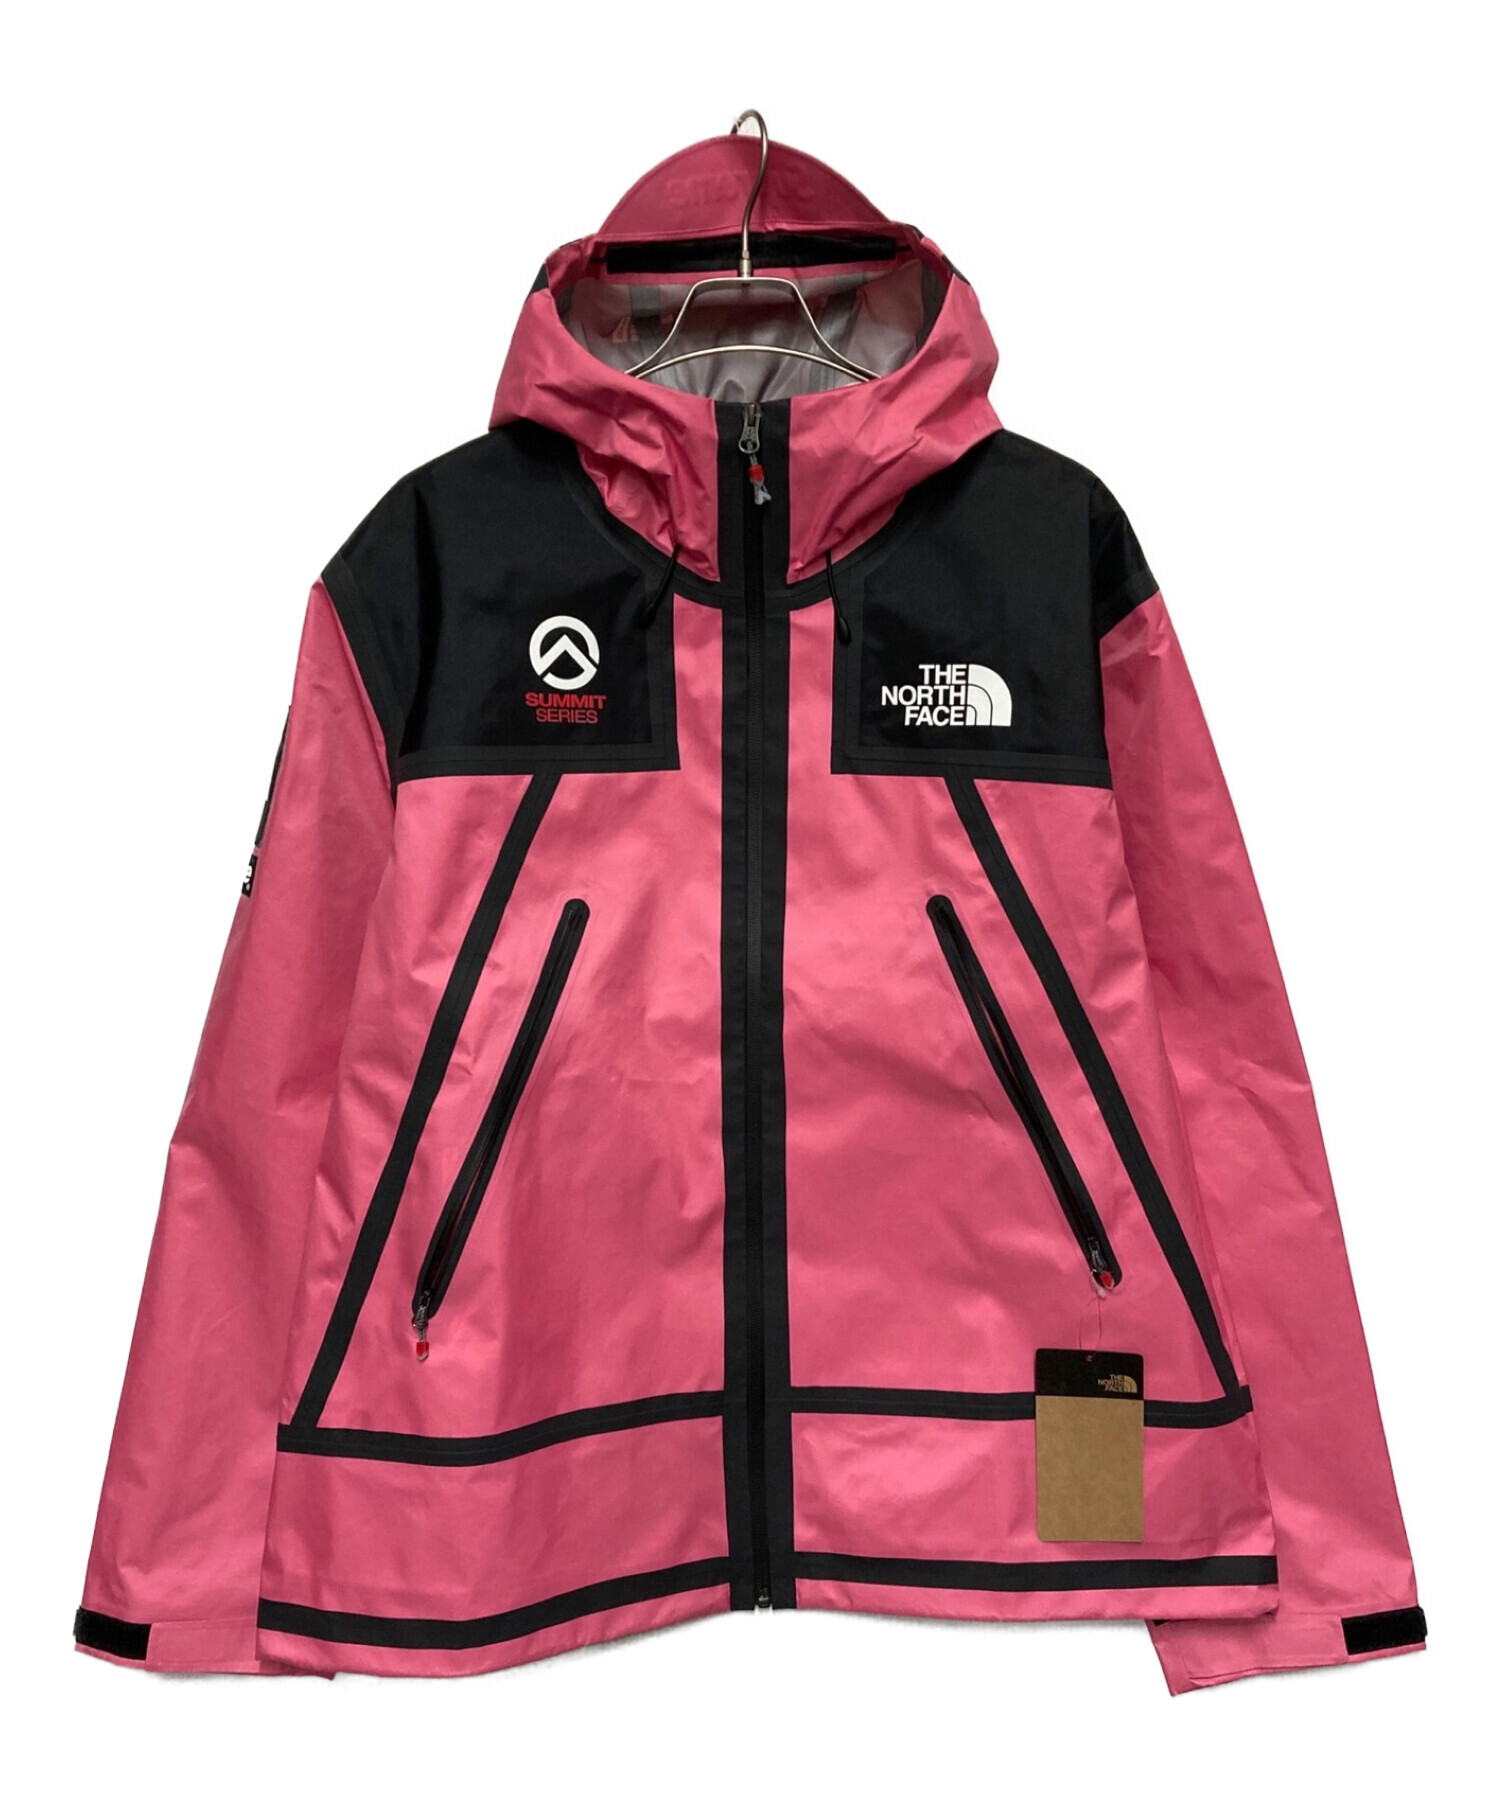 XL Supreme North Face summit jacket - マウンテンパーカー